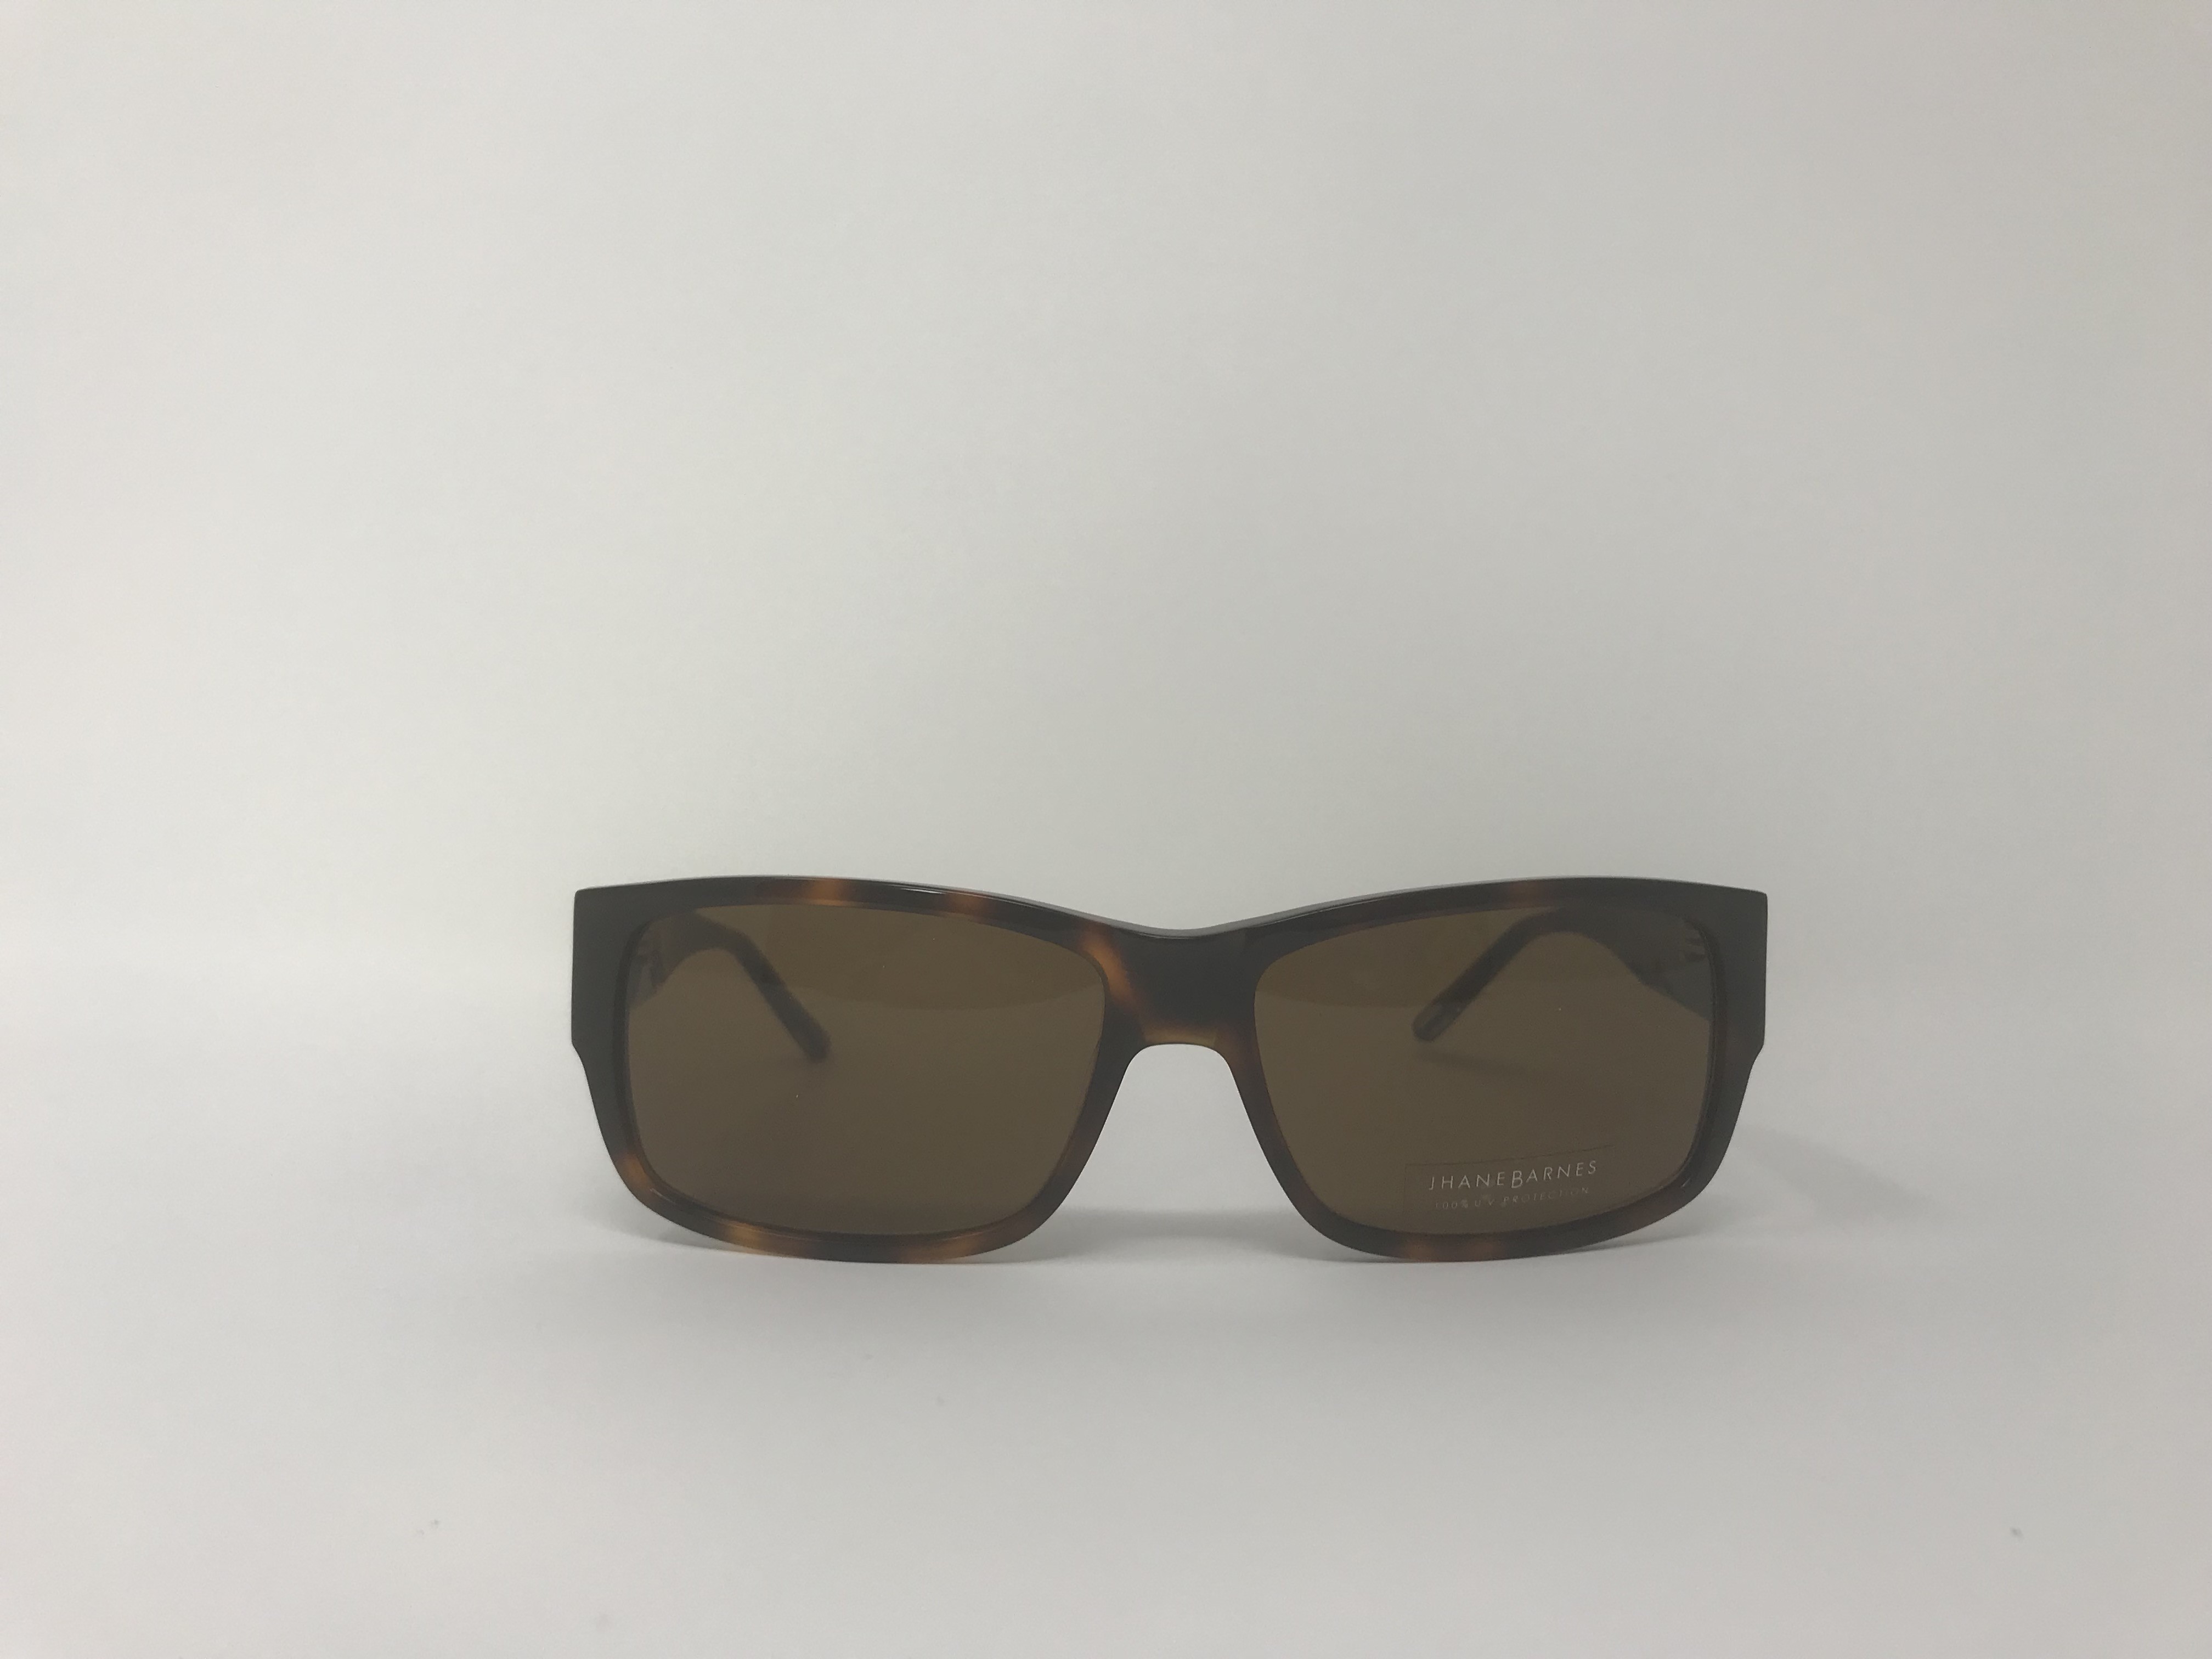 Jhane Barnes J920 Men's sunglasses